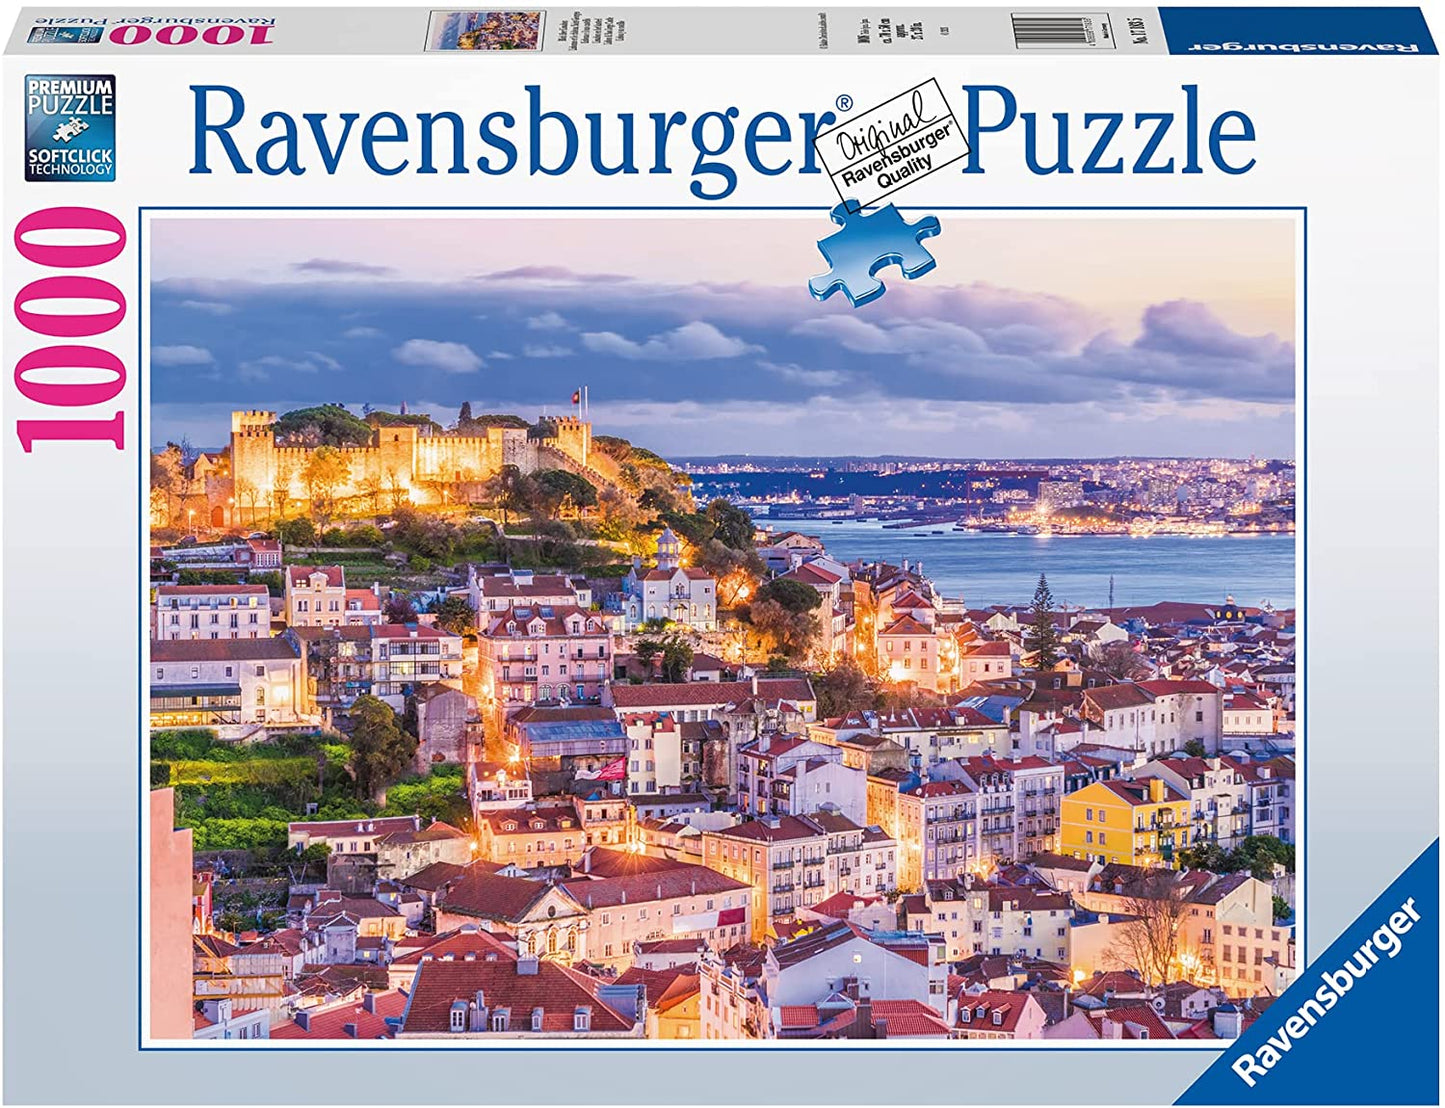 Ravensburger - Lisbon & Sao Jorge Castle - 1000 Piece Jigsaw Puzzle